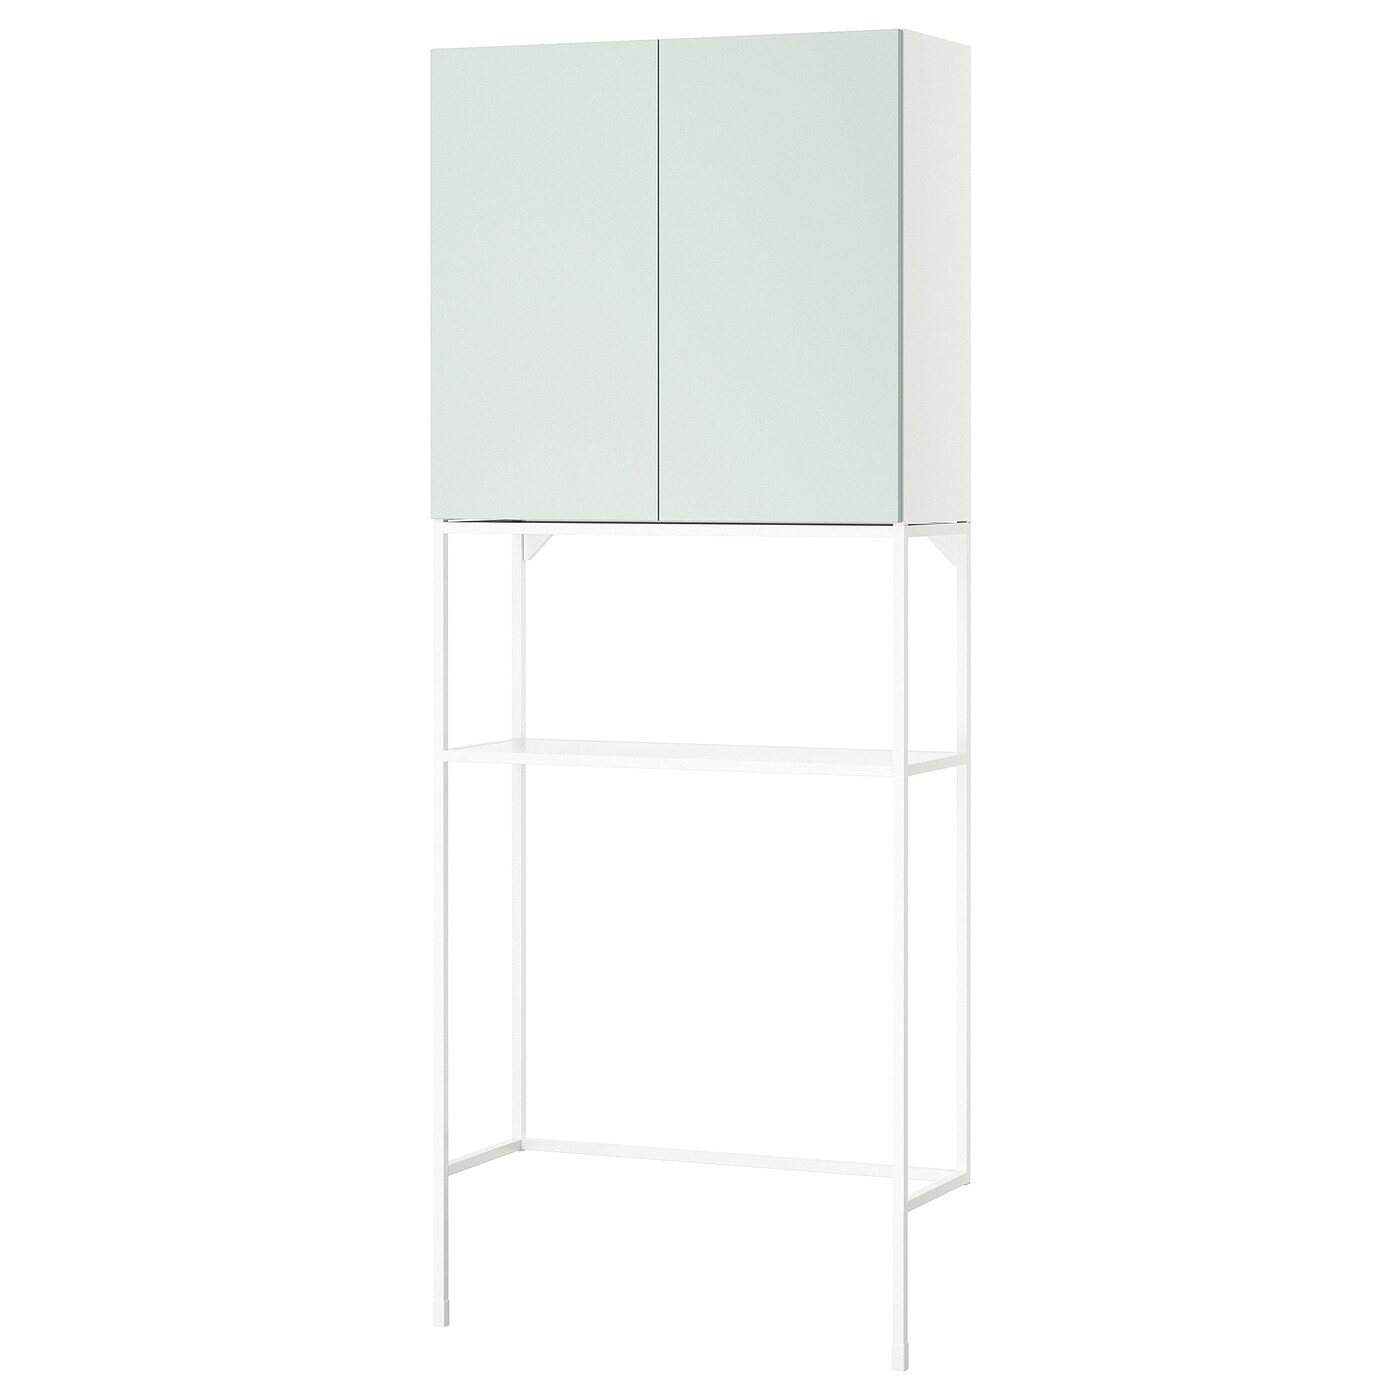 Книжный шкаф -  ENHET IKEA/ ЭНХЕТ ИКЕА, 204х80 см, белый/зеленый